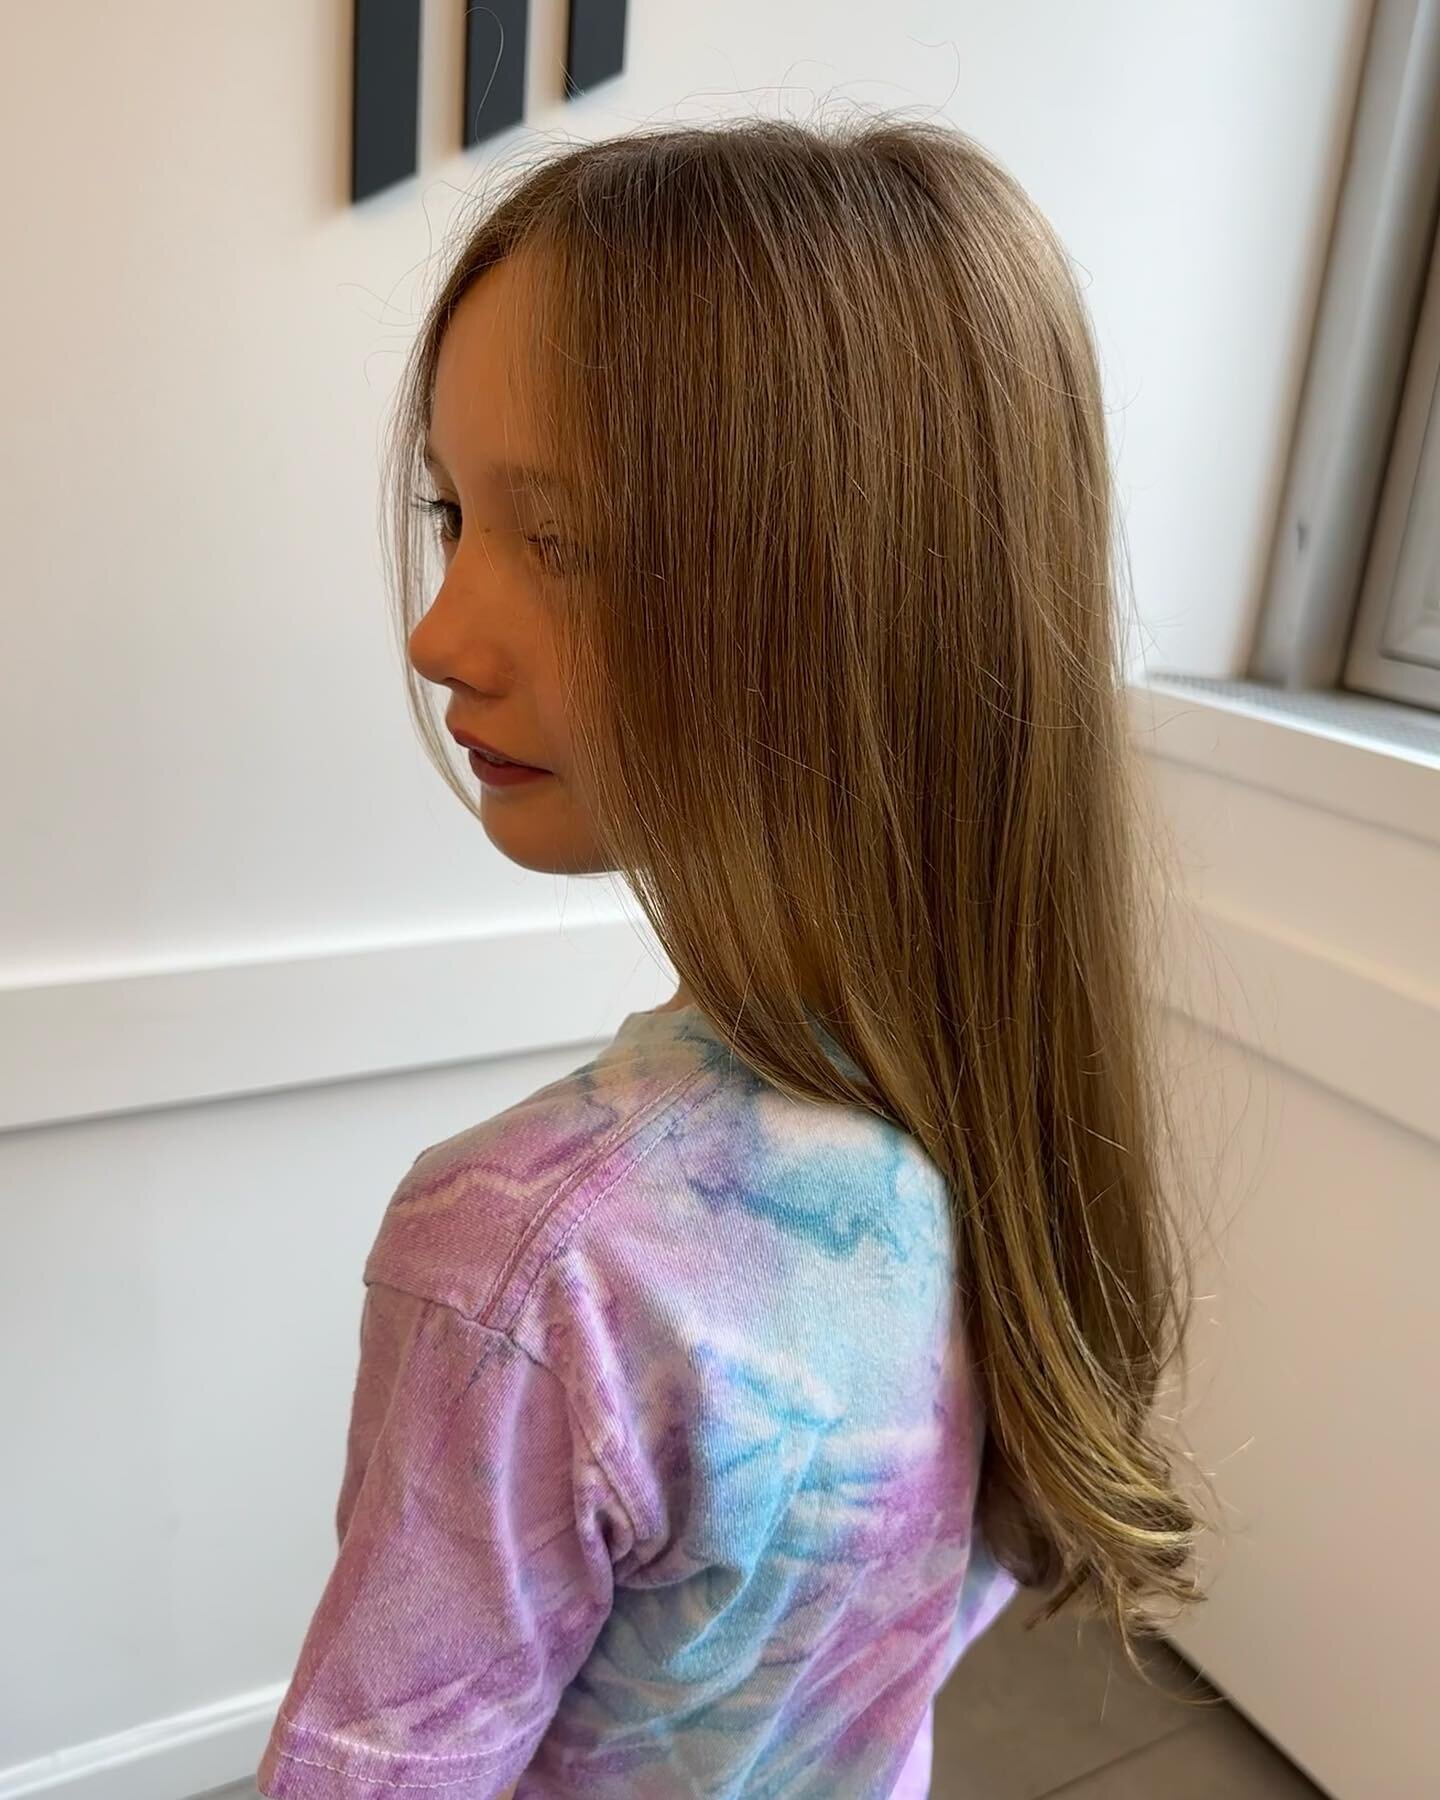 Kids supporting kids 💖

#hairraising @hairraising_bch @bostonchildrens #bostonsalon

Hair by @michellelee.styles